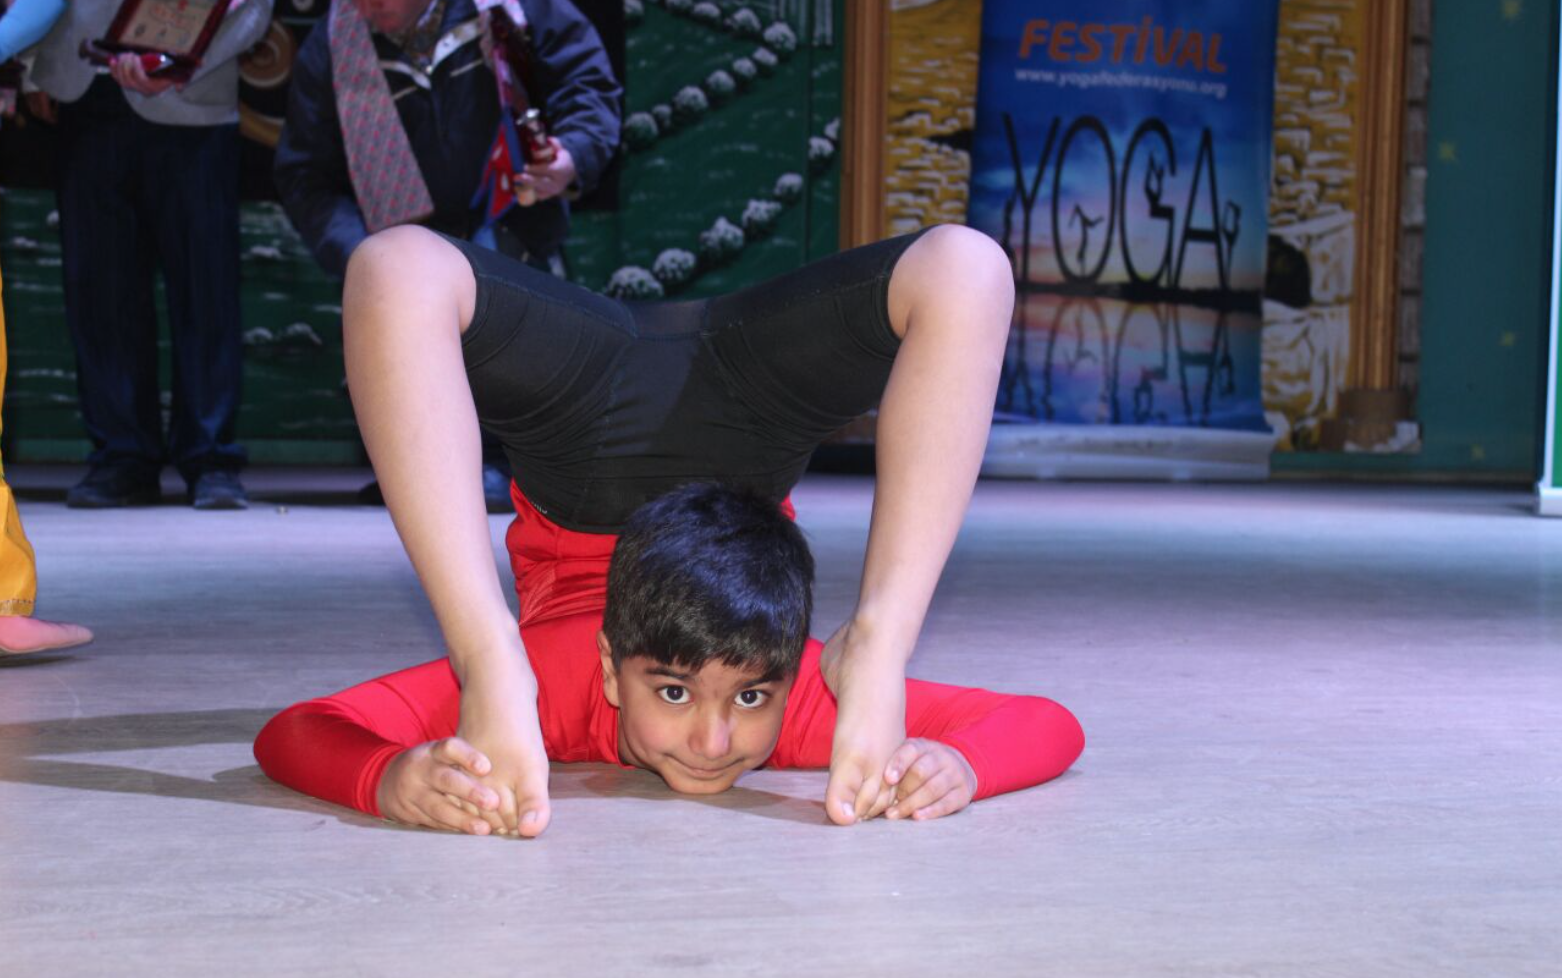 British Indian boy wins global Yoga contest